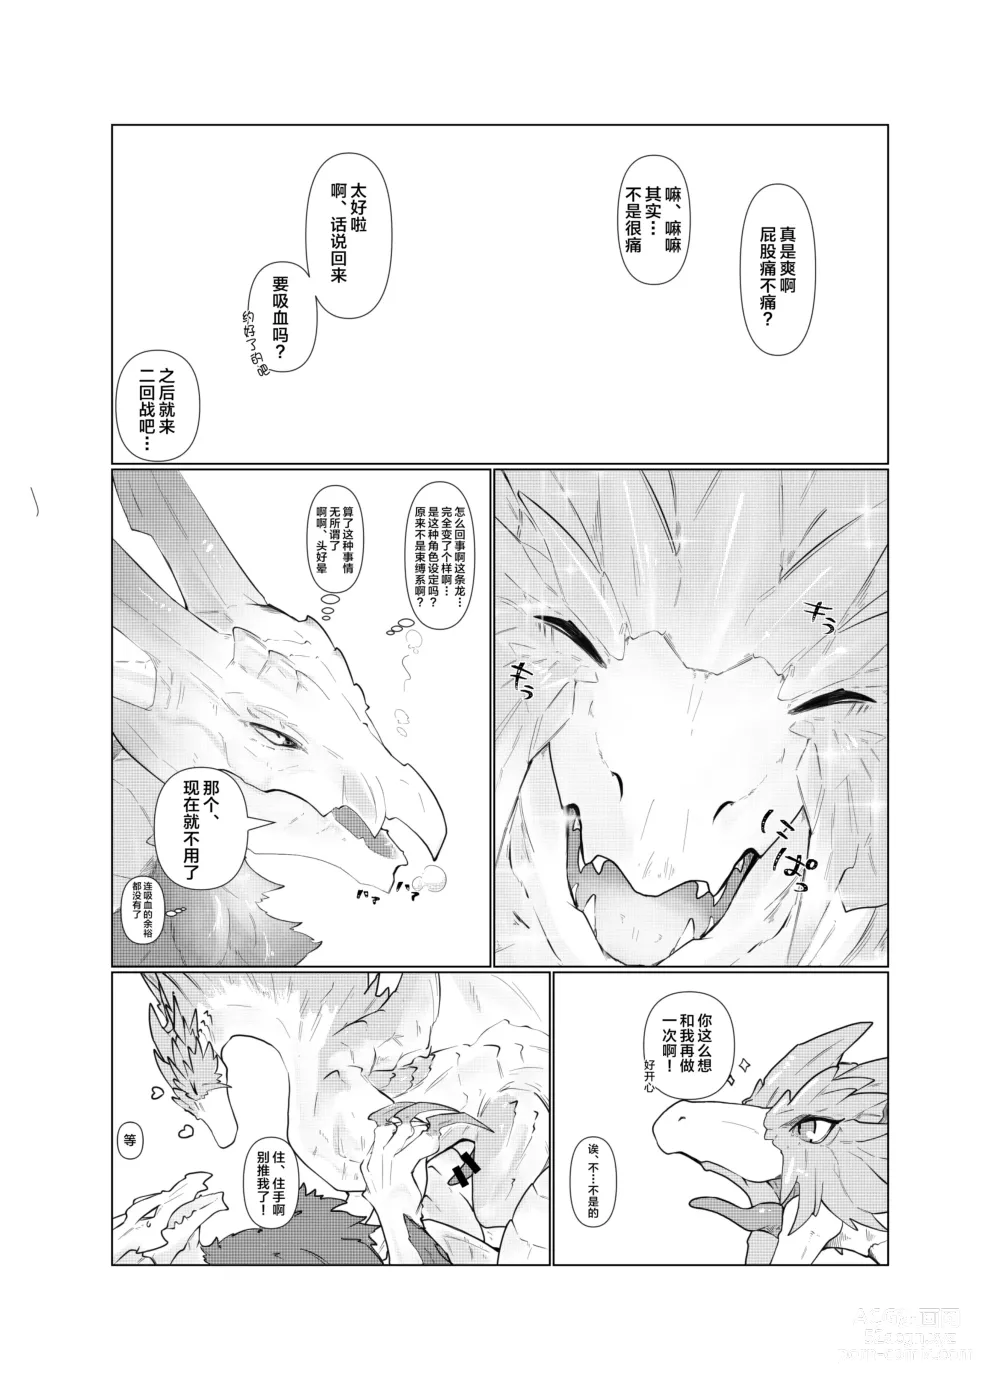 Page 32 of doujinshi 玉響